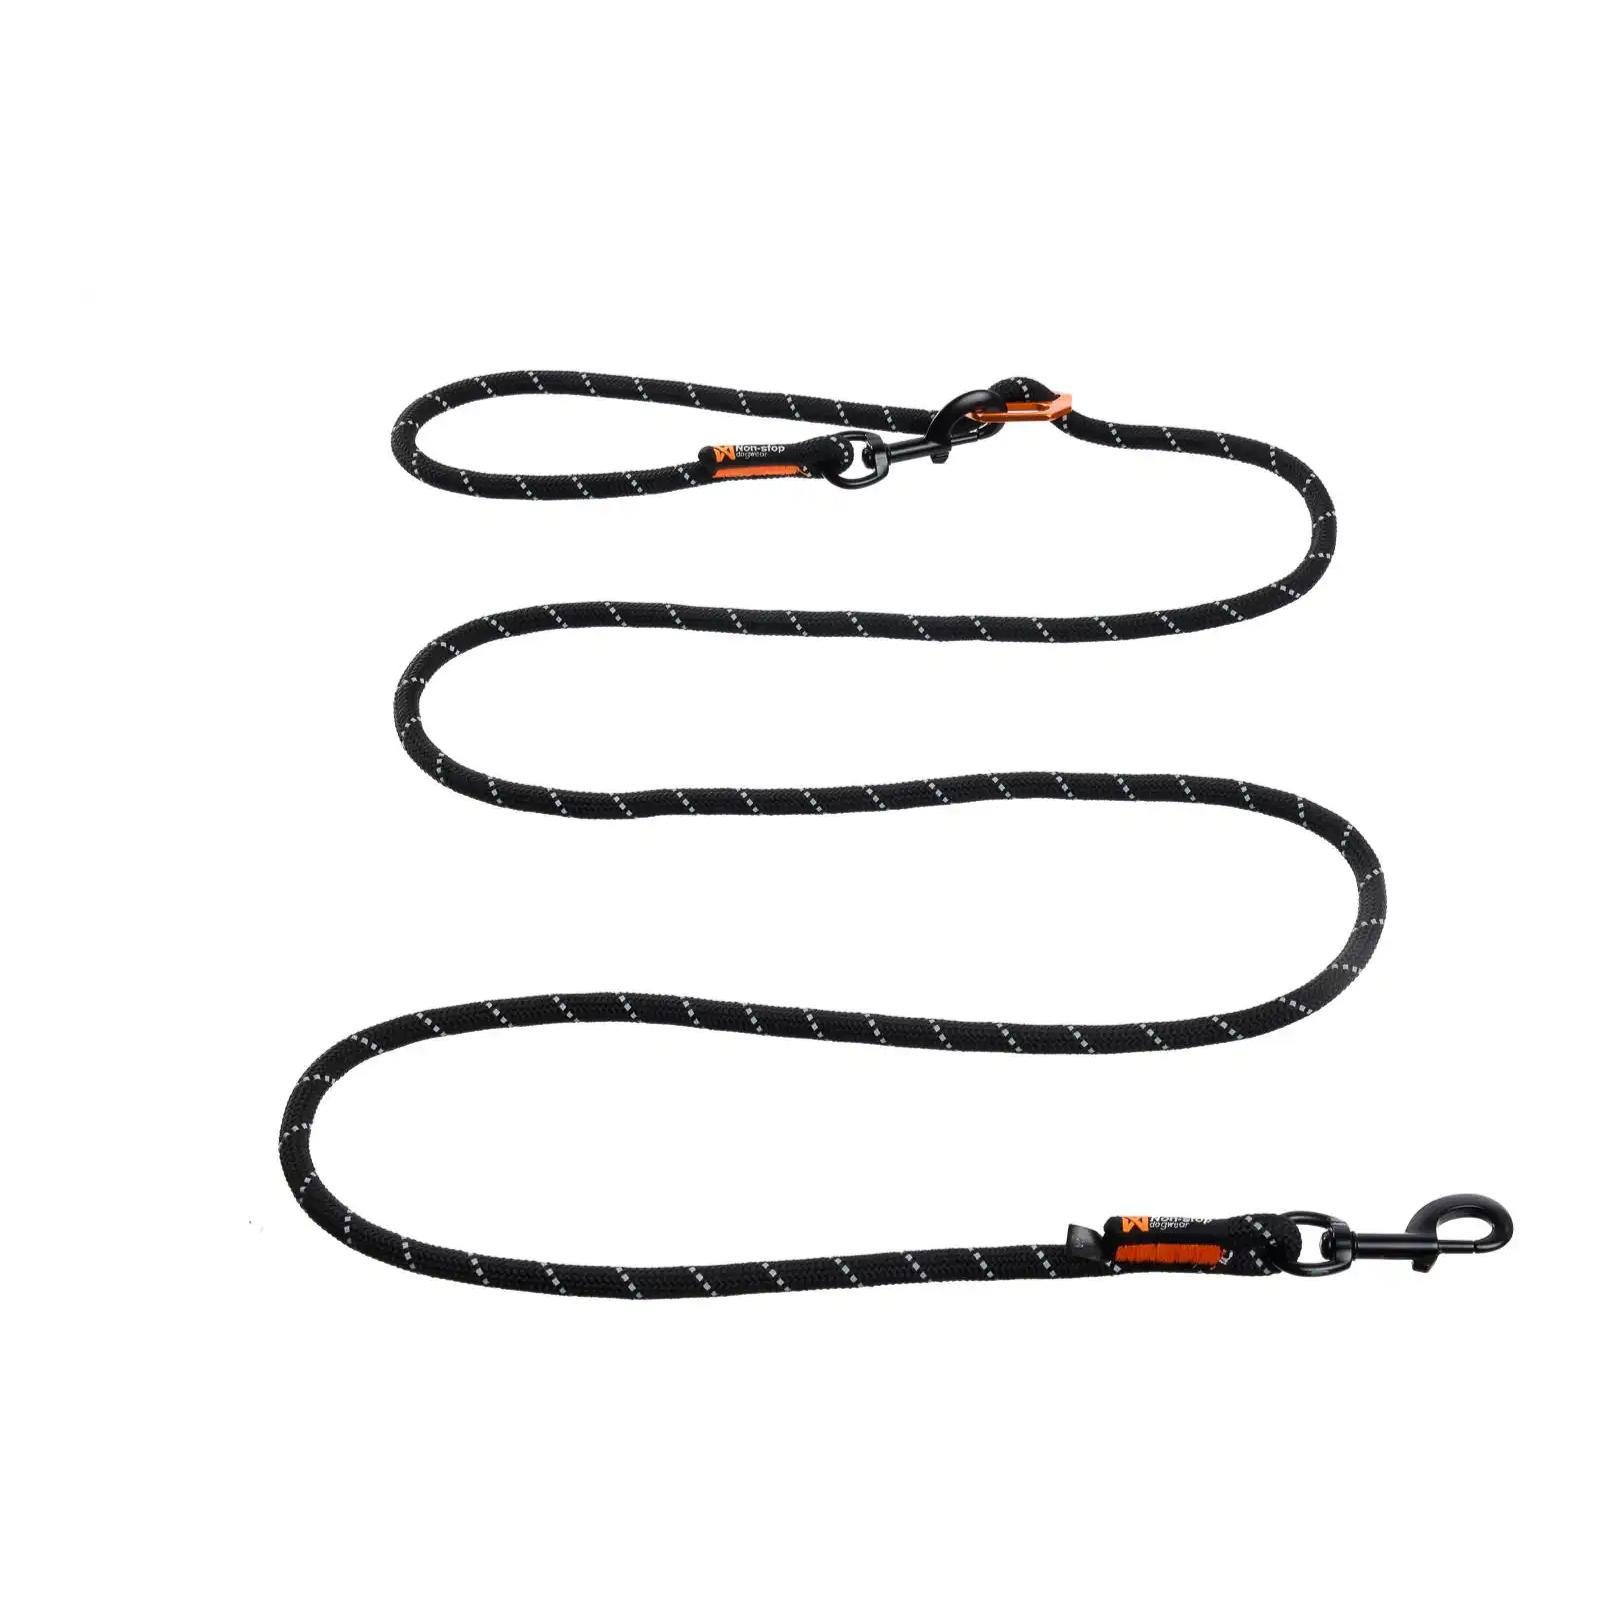 Non-stop Dogwear Rock leash adjustable